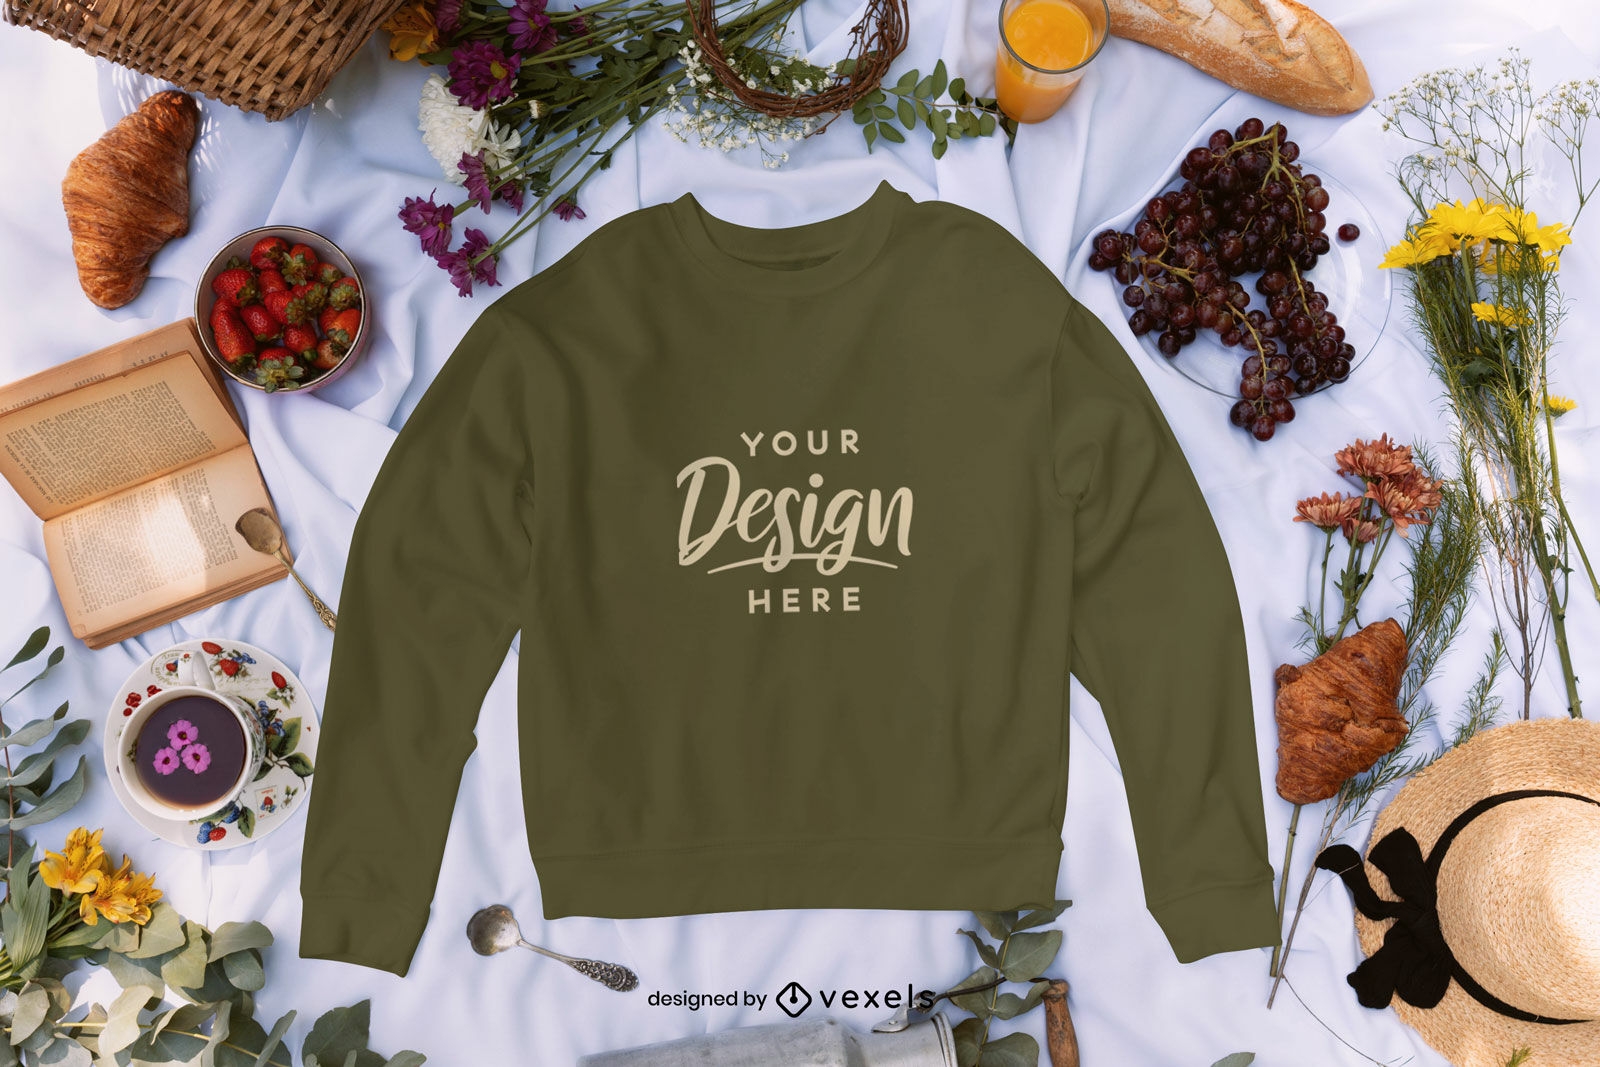 Picnic cottagecore sweatshirt mockup